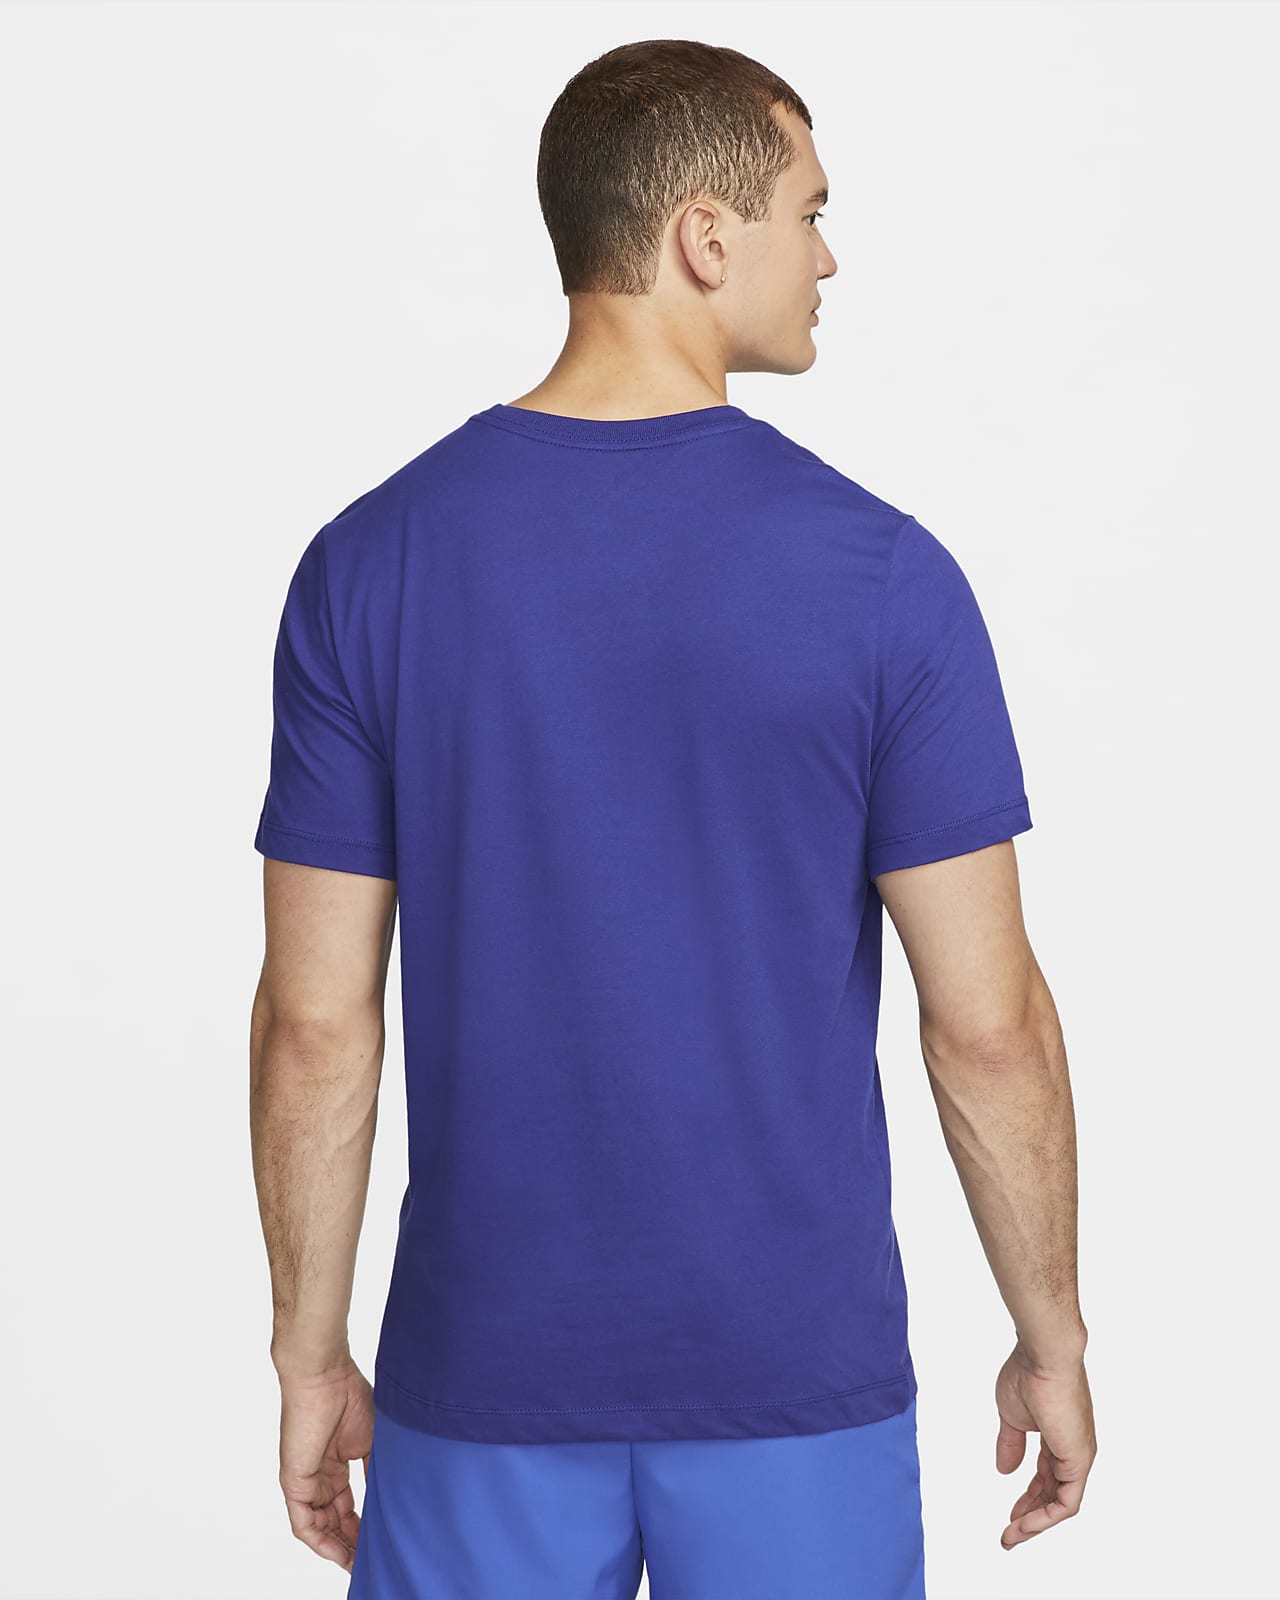 Nike Men's Swoosh T-Shirt.